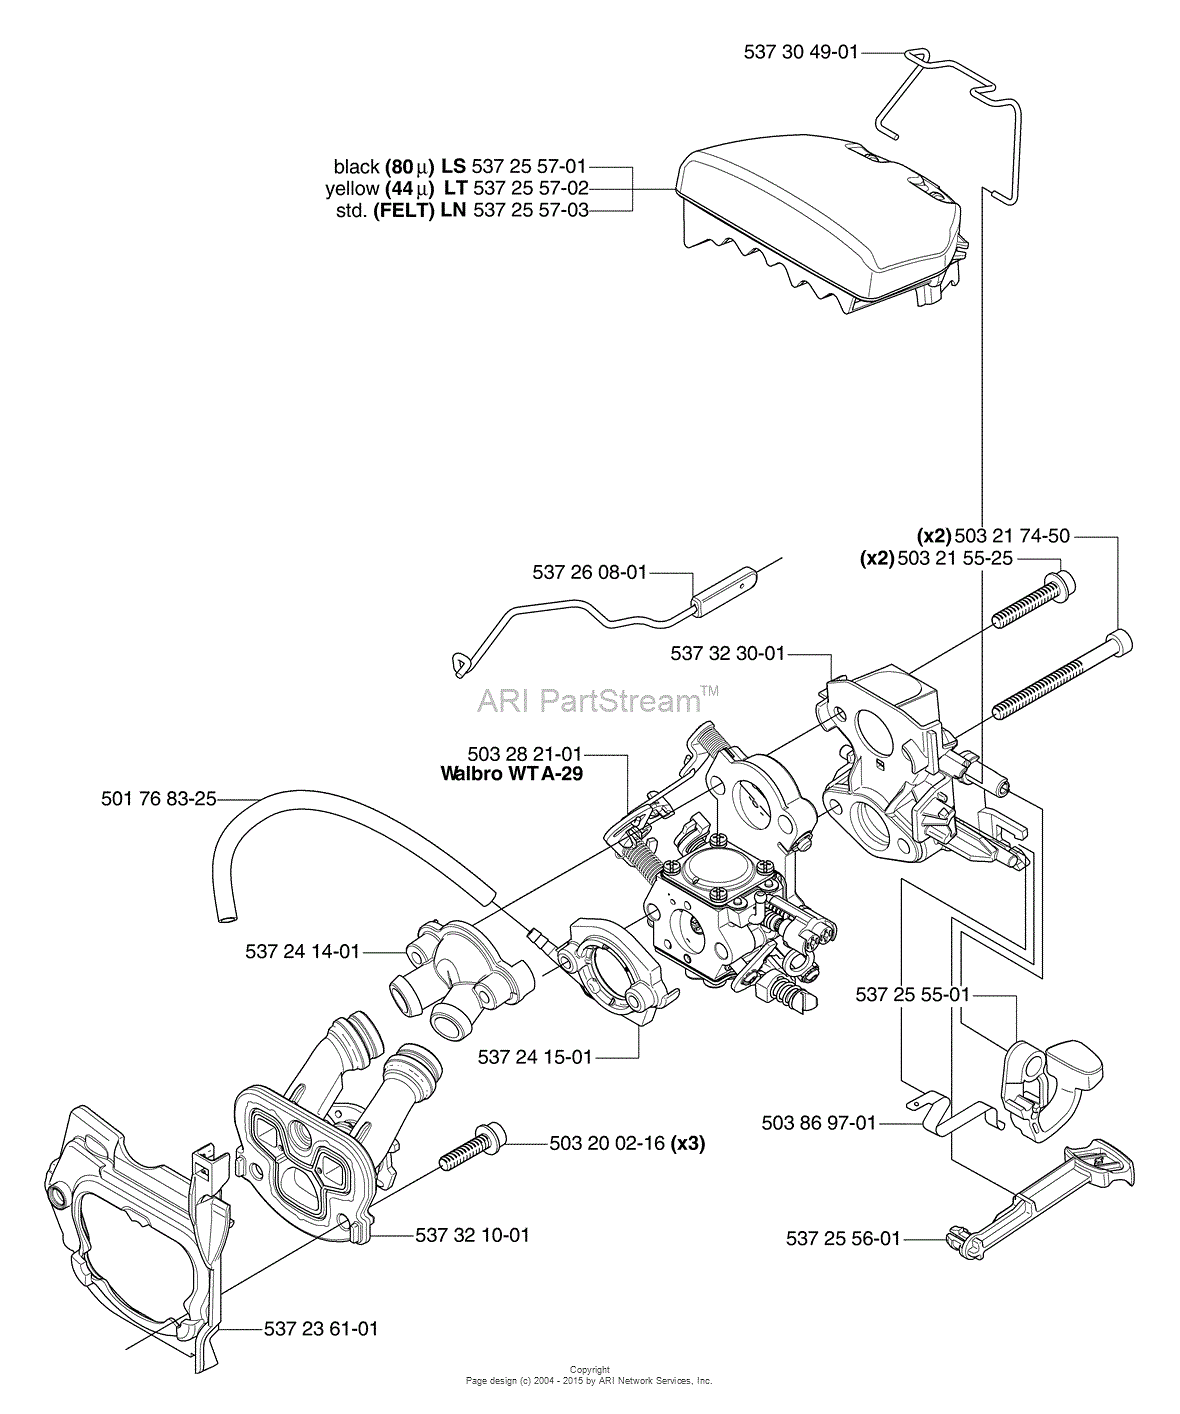 Husqvarna 455 Rancher Parts Diagram General Wiring Diagram